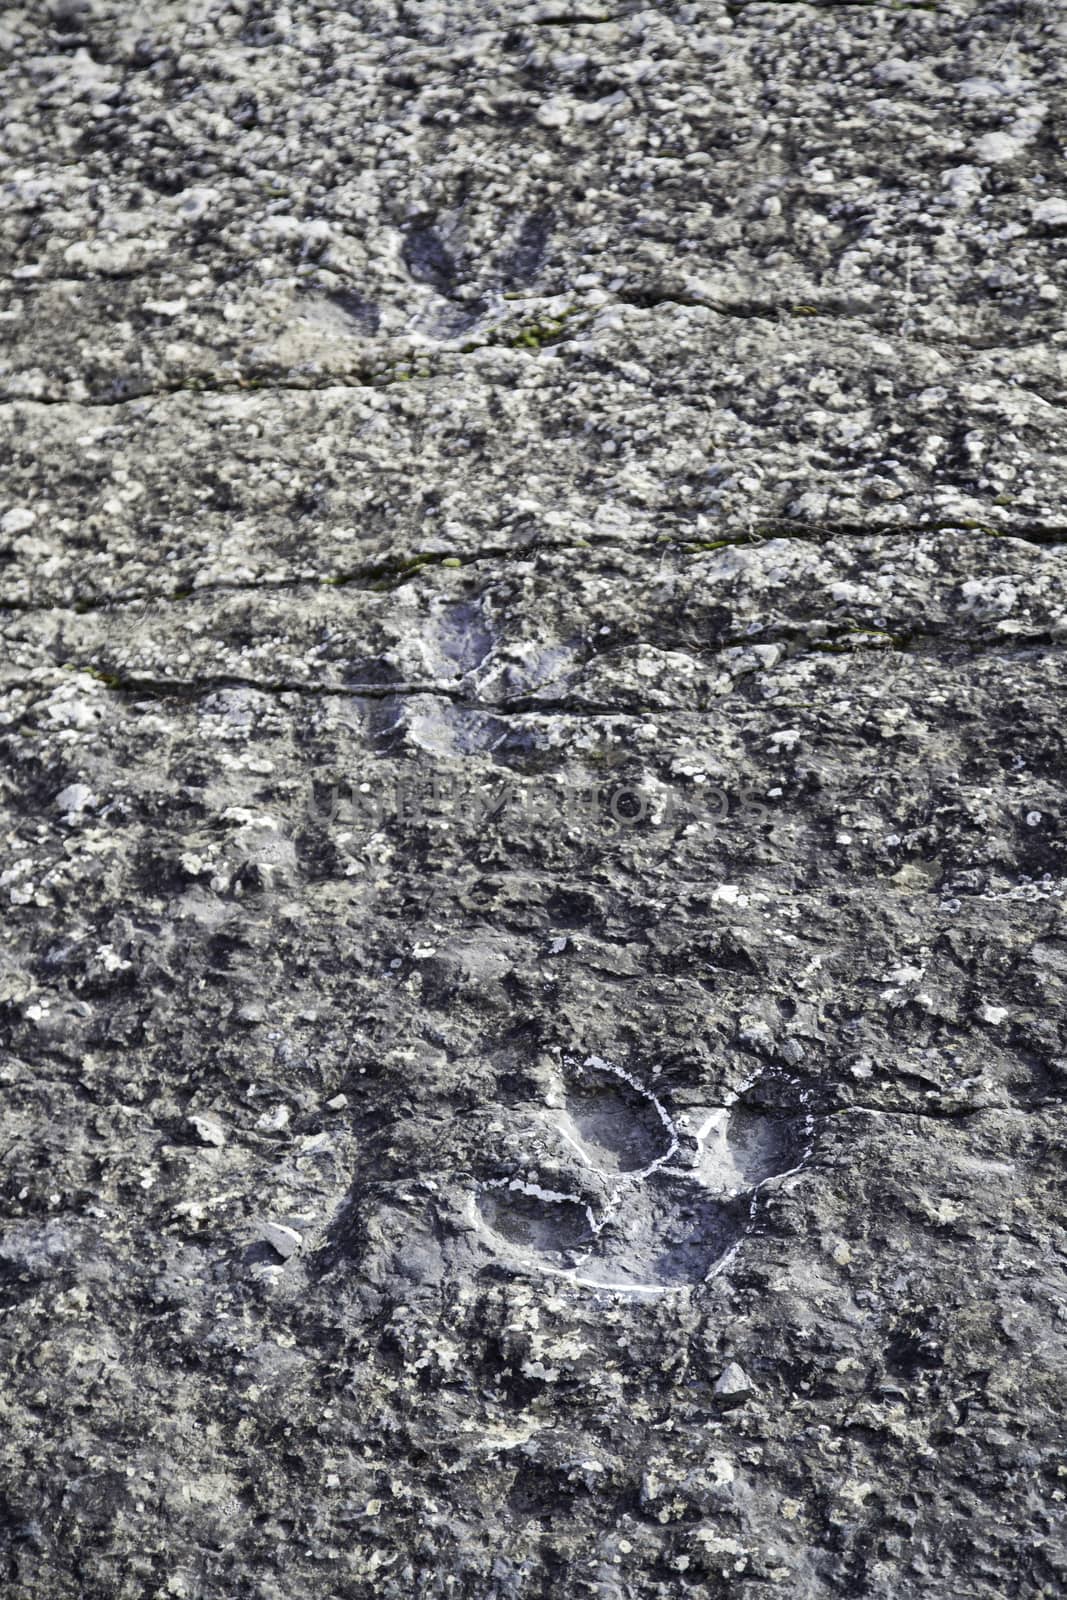 Dinosaur fossil footprints by esebene